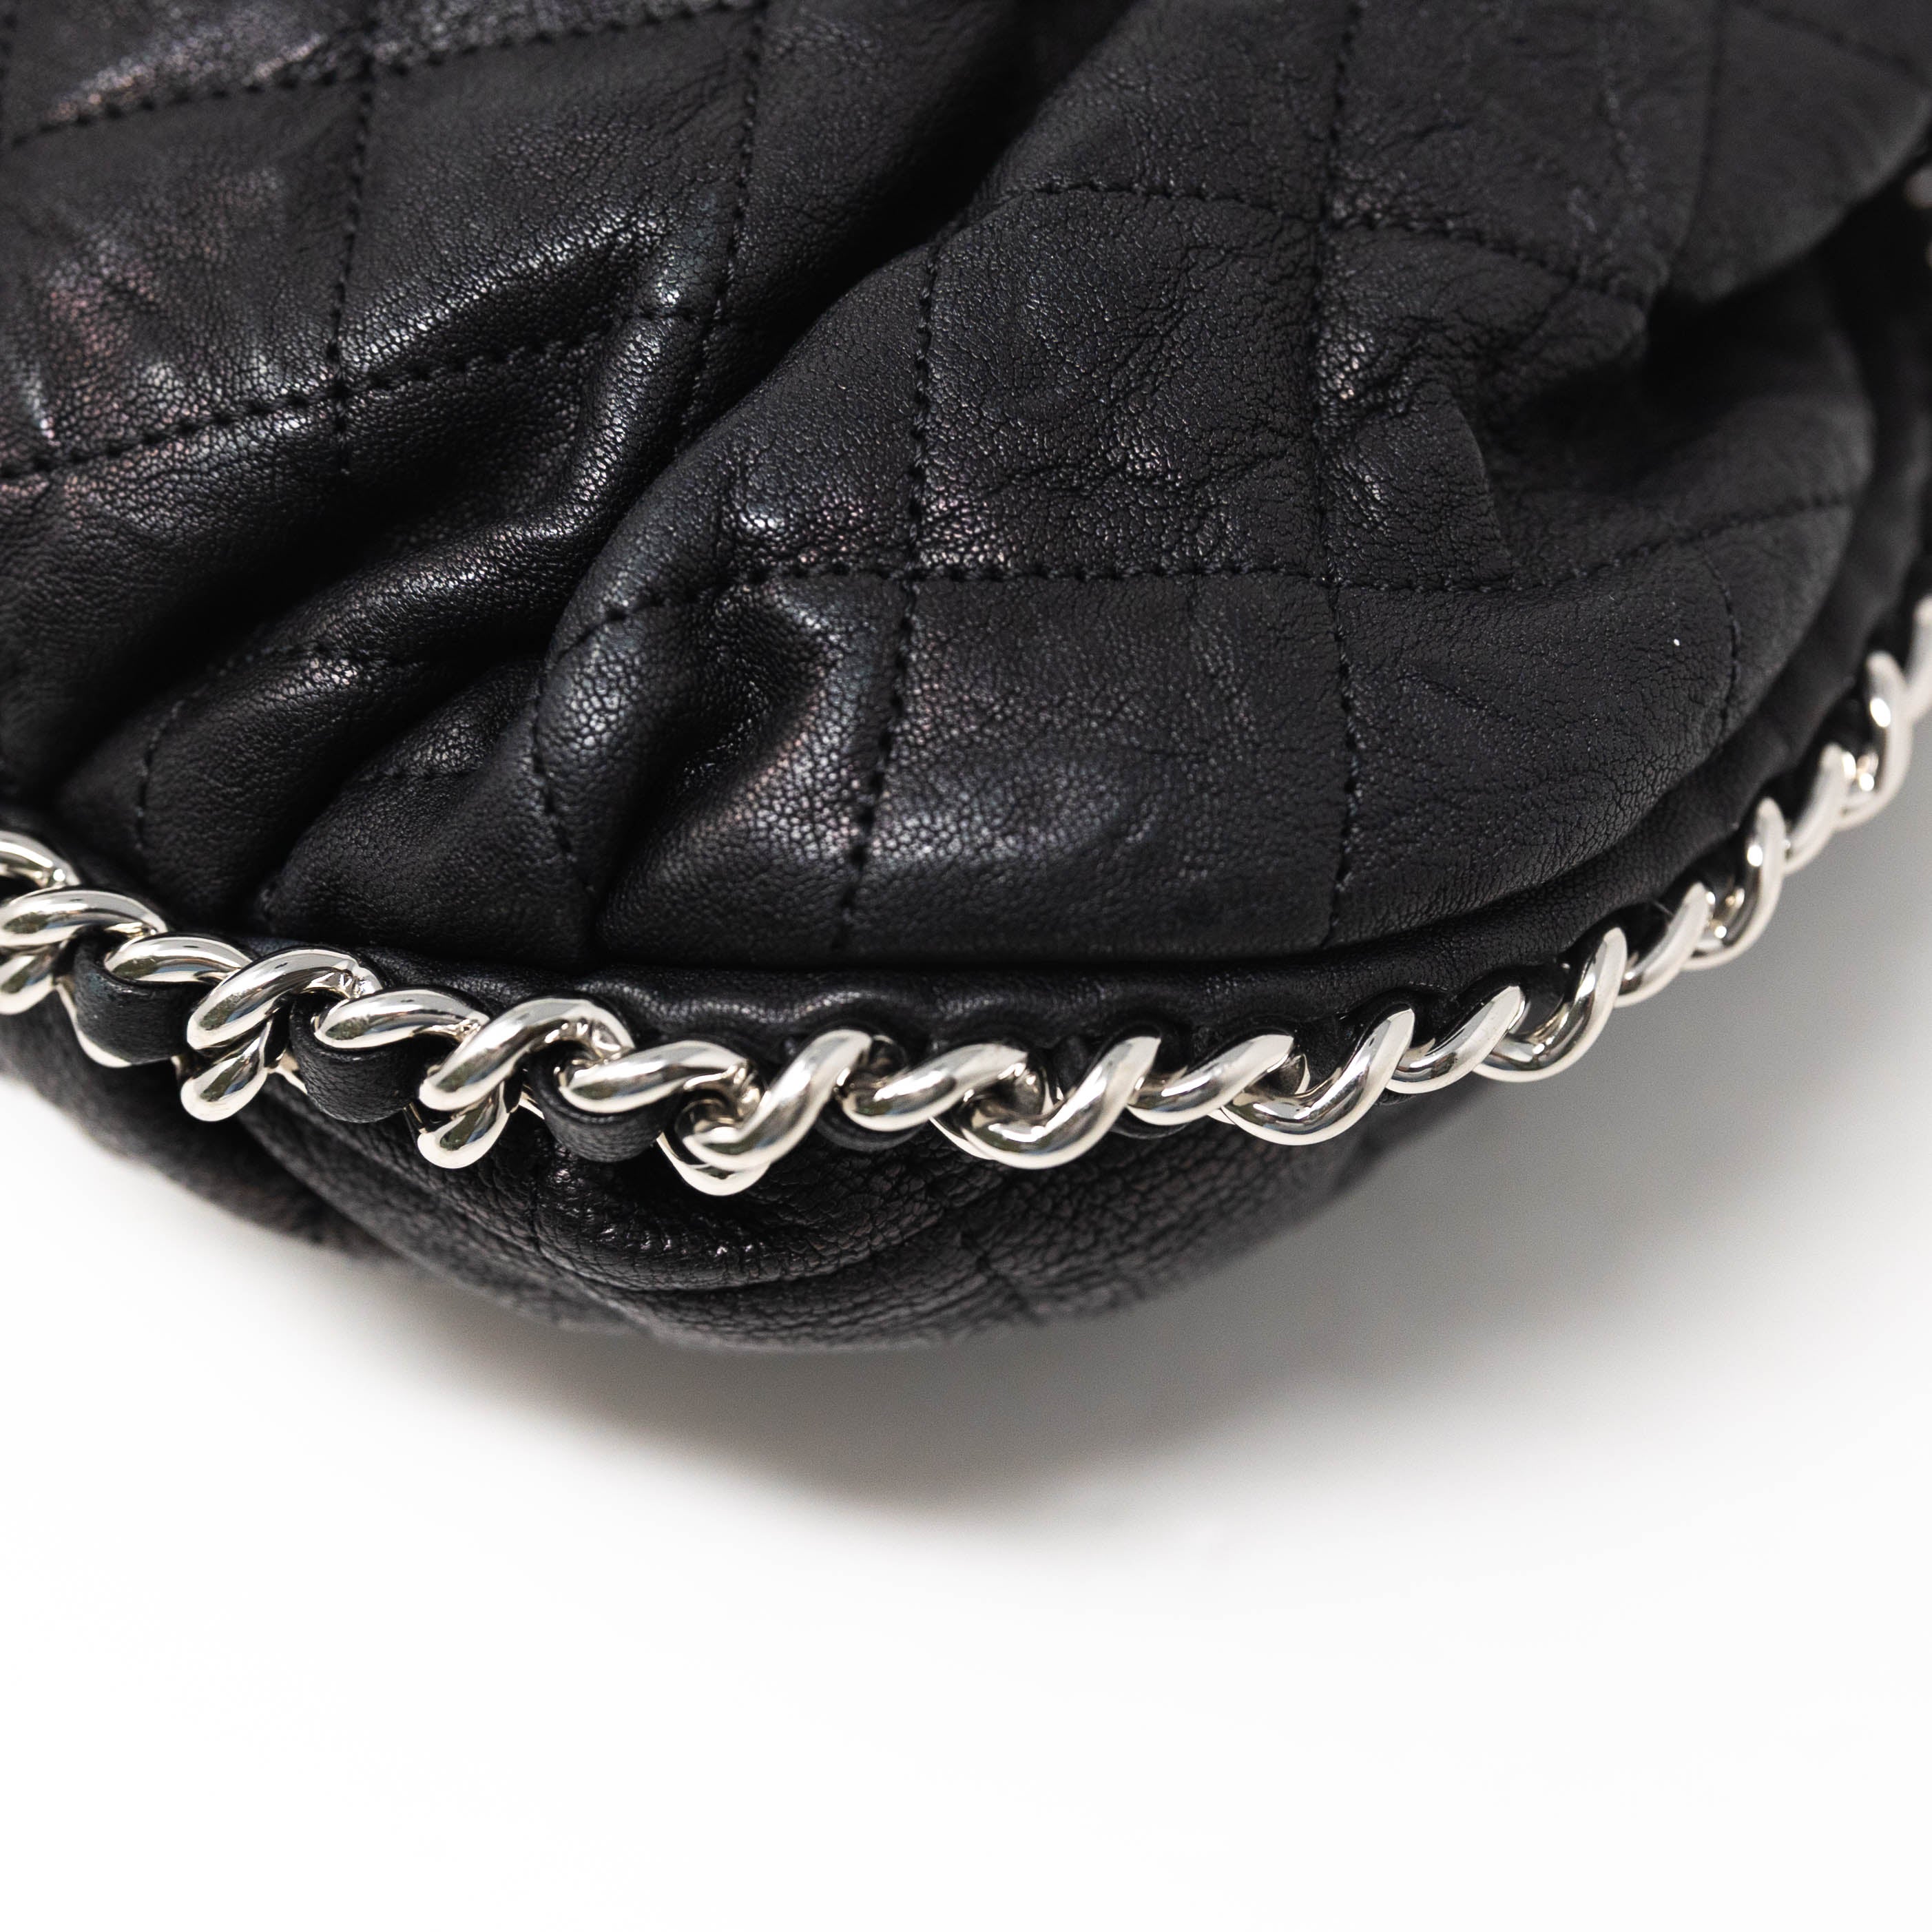 Chanel Black Medium Chain Around Bag